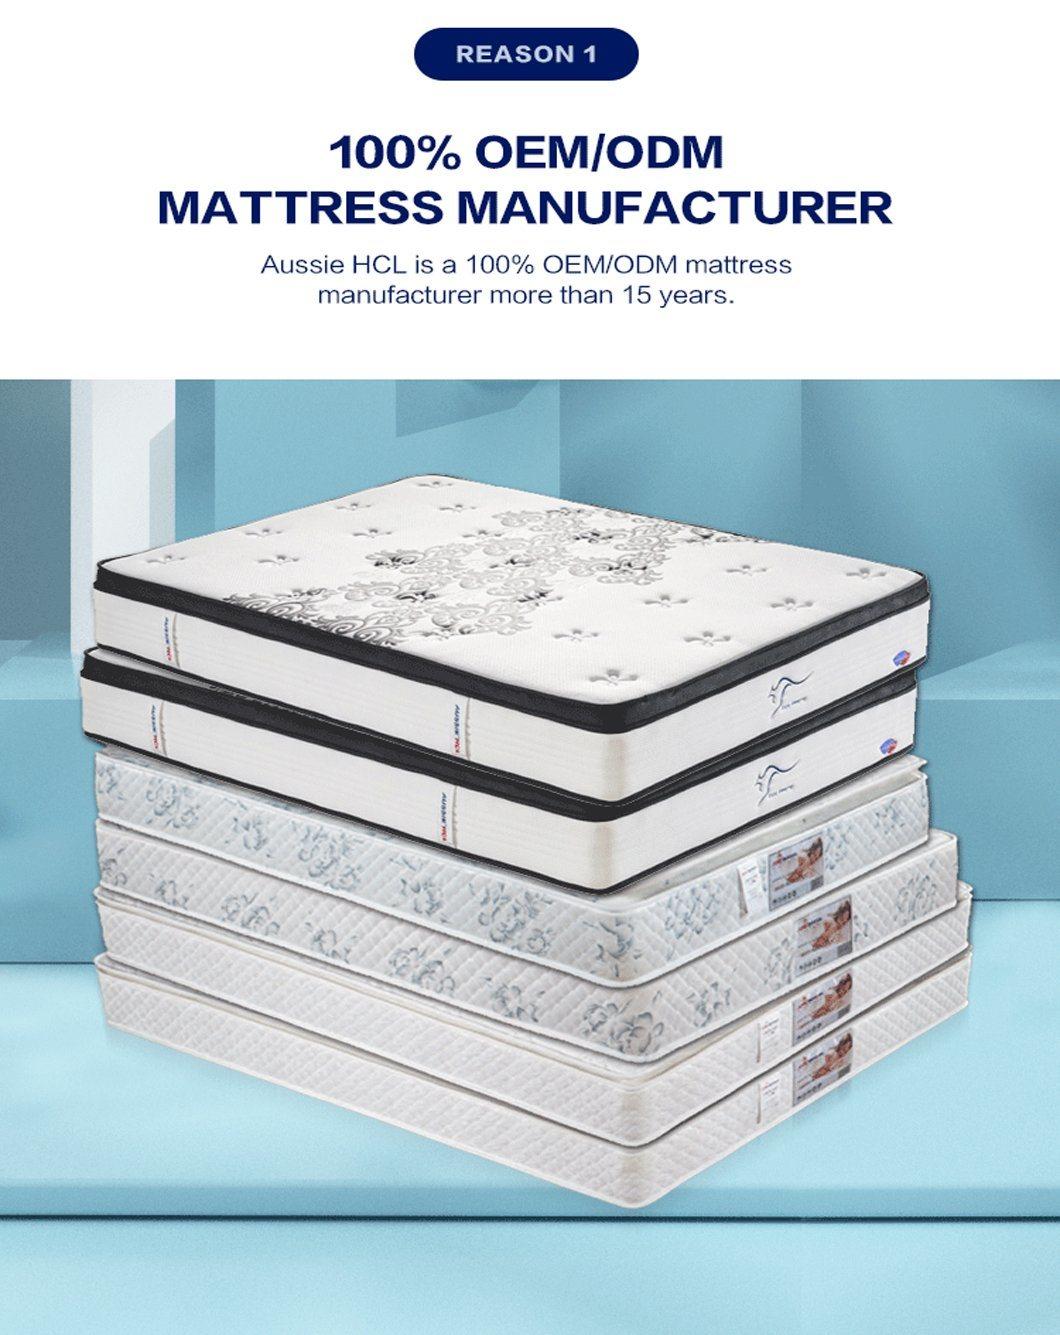 The Best Factory Aussie Roll Sleeping Well Full Inch Mattresses Cooling Gel Memory Foam Spring Mattress in a Box